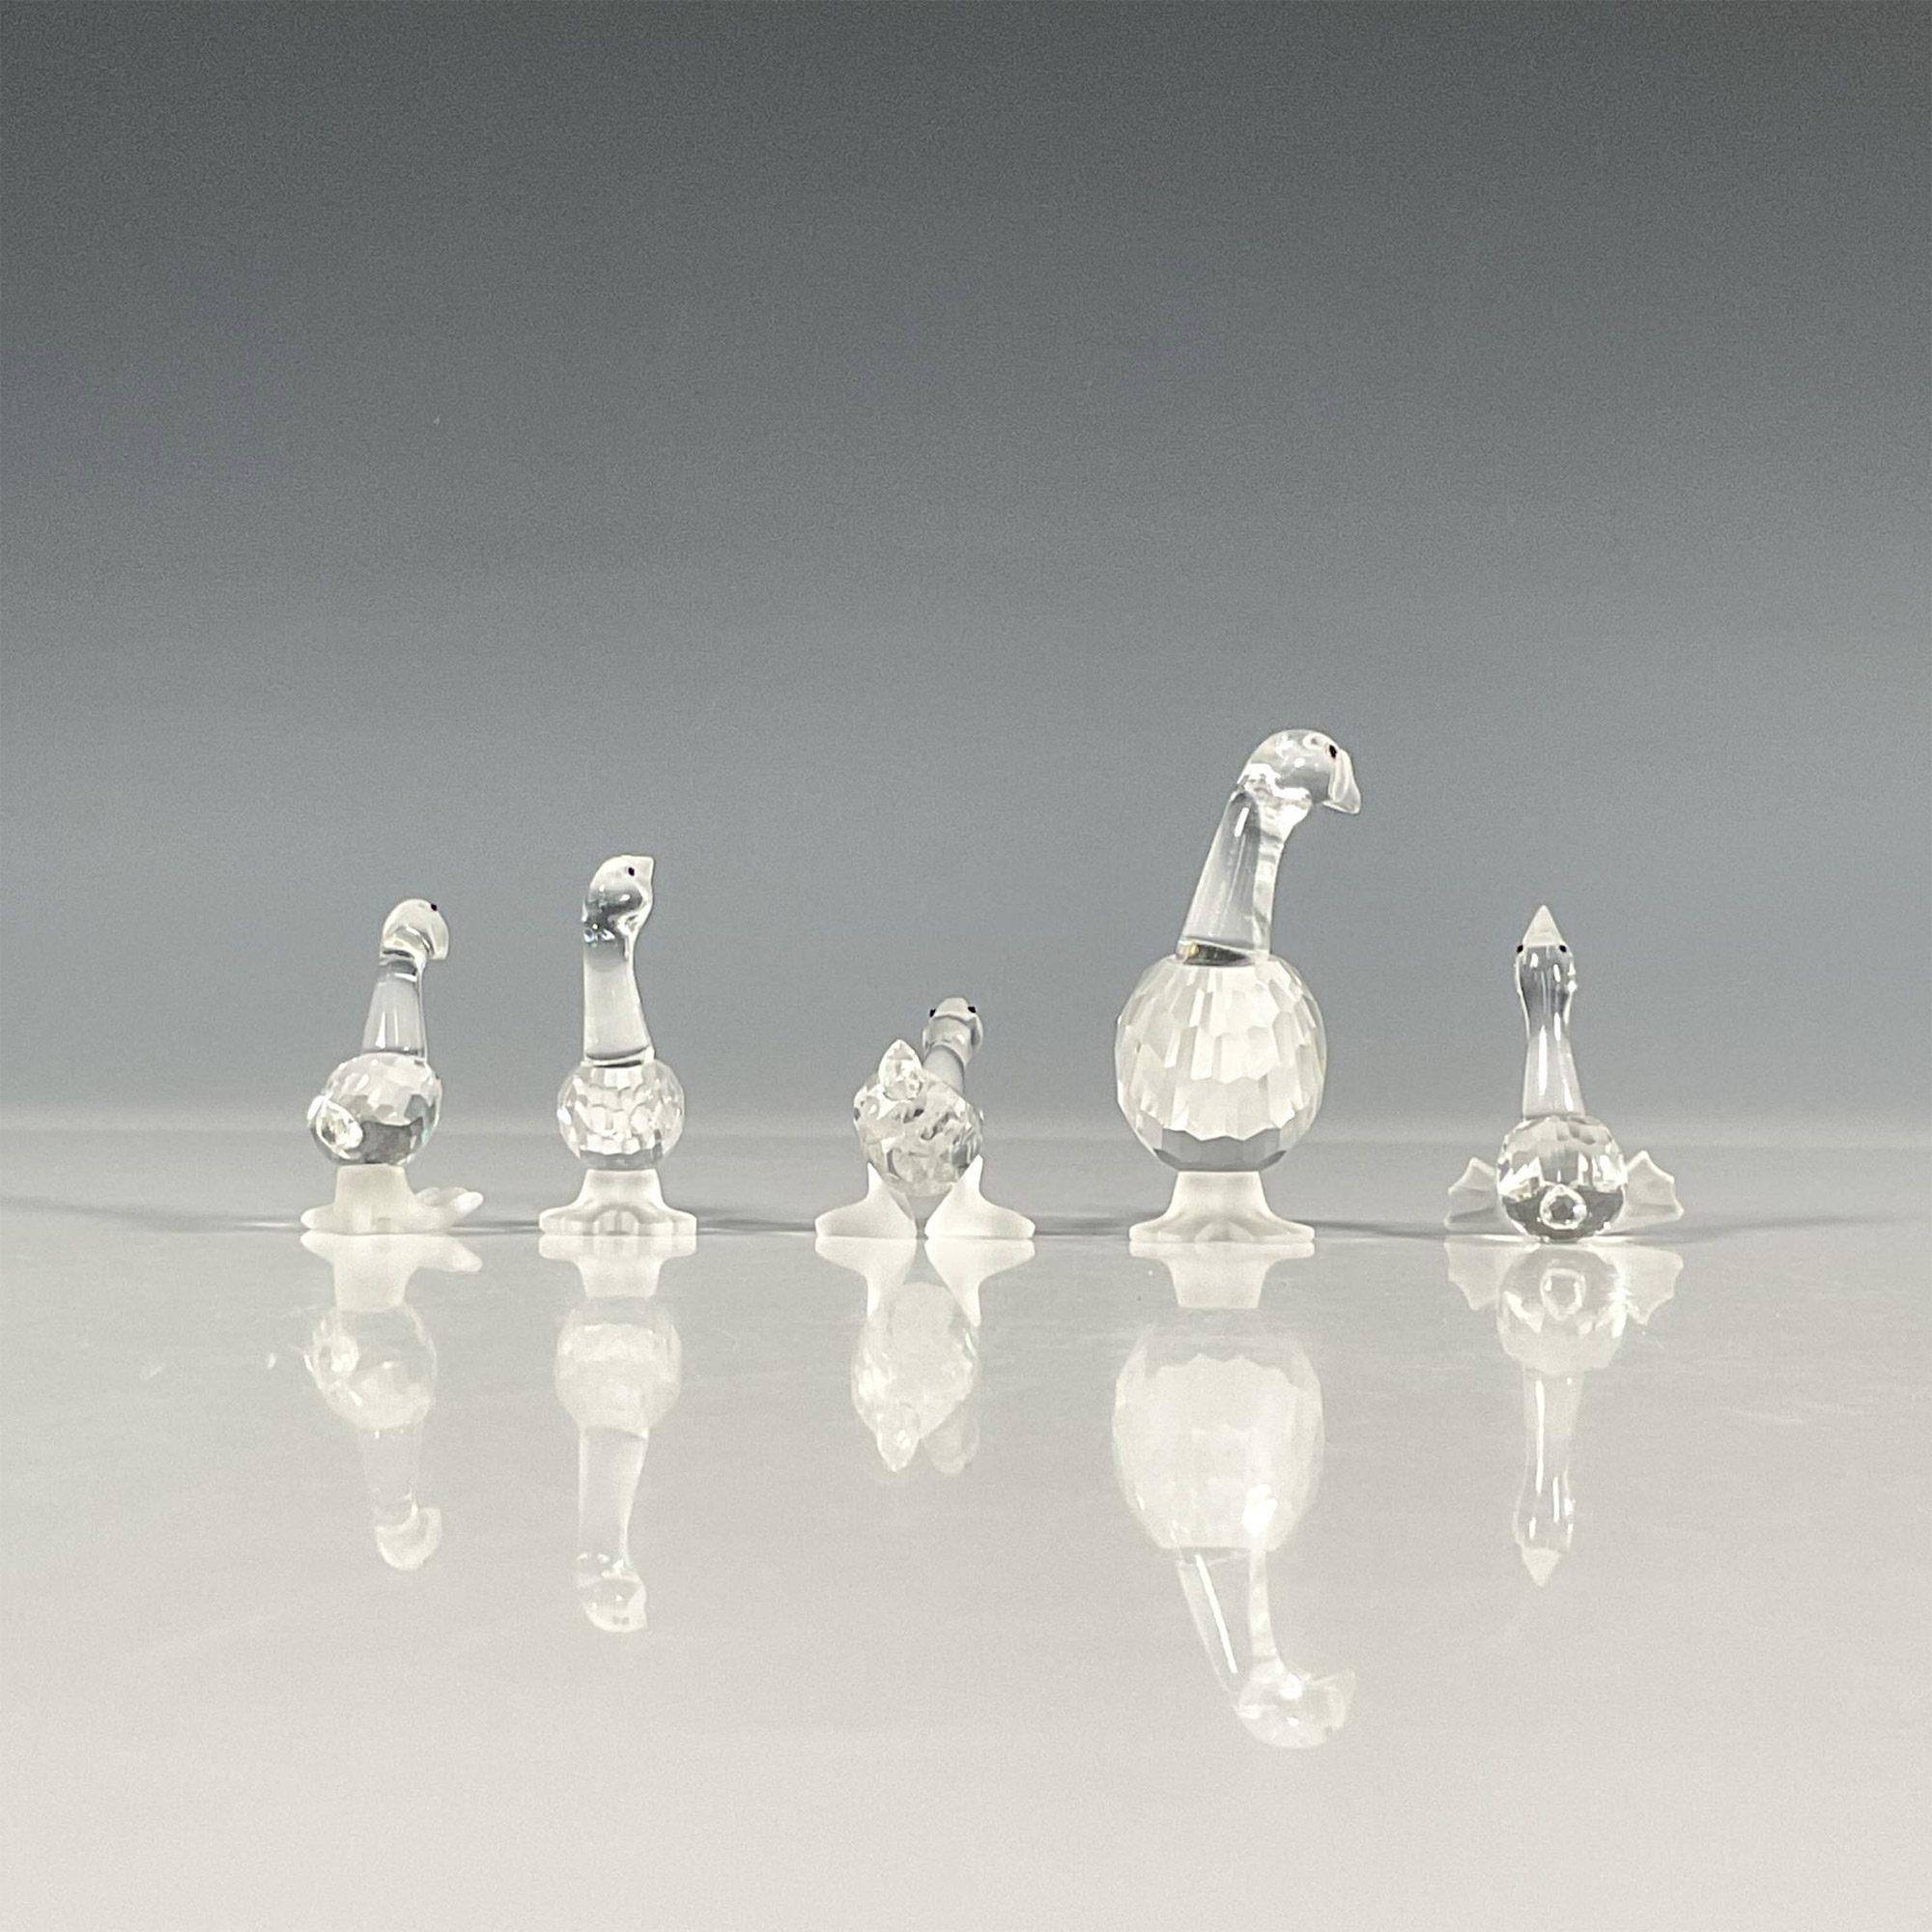 5pc Swarovski Crystal Goose Figurines - Image 4 of 5